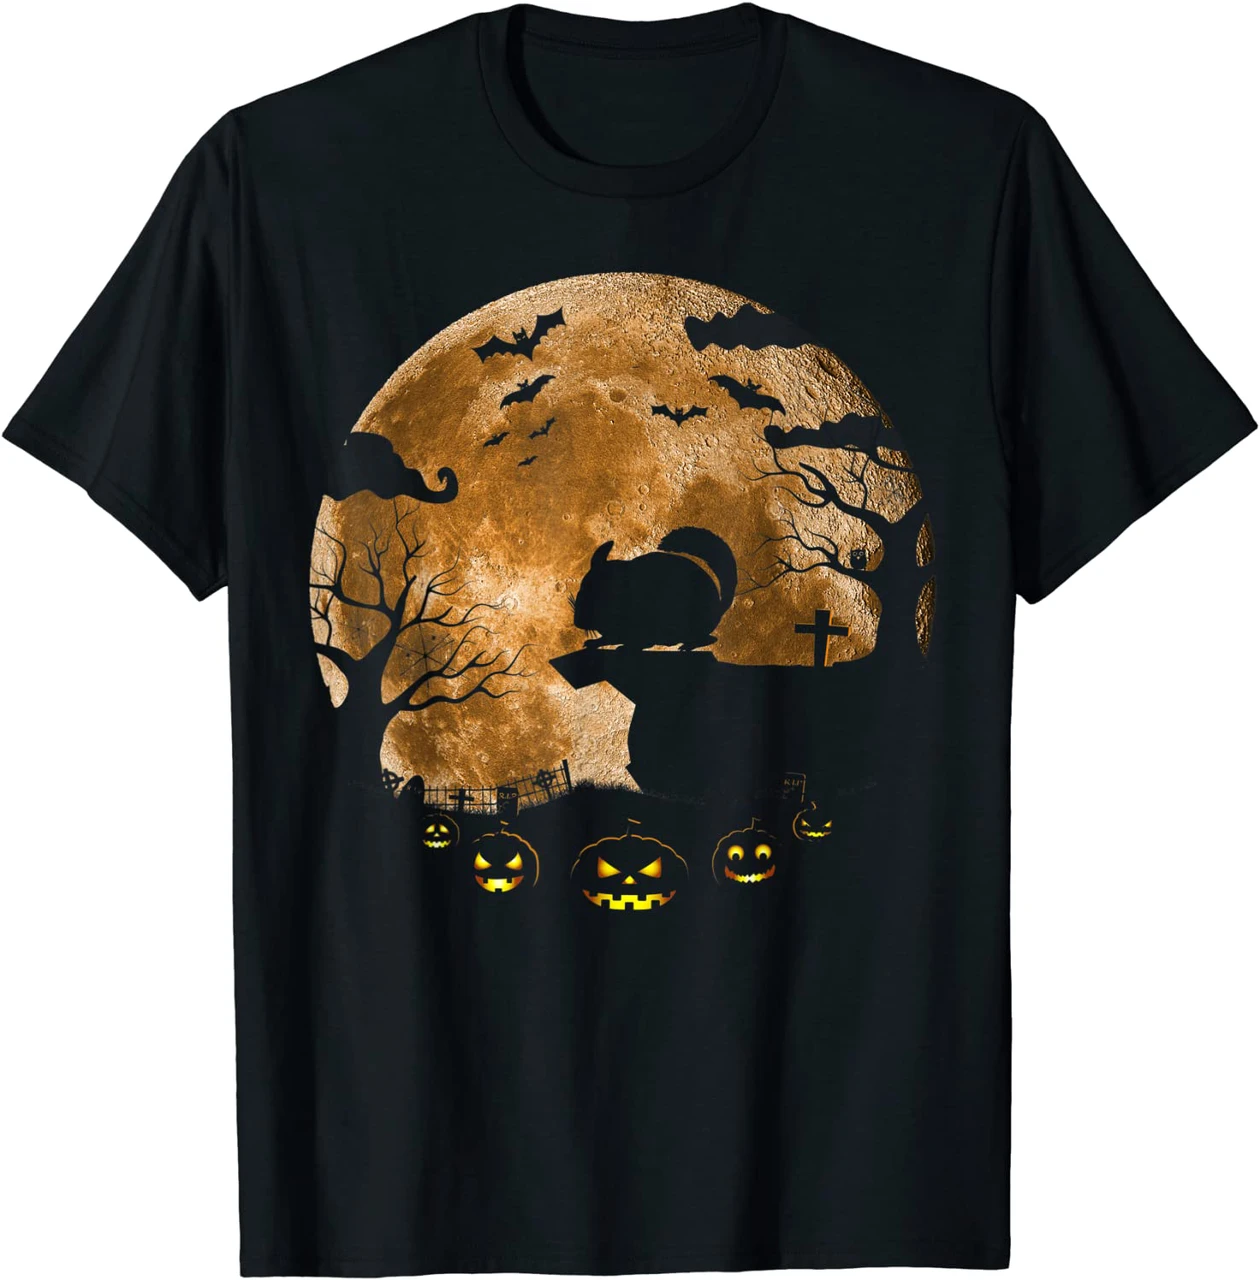 Chinchilla And Moon Halloween Rodent Animal Shirt